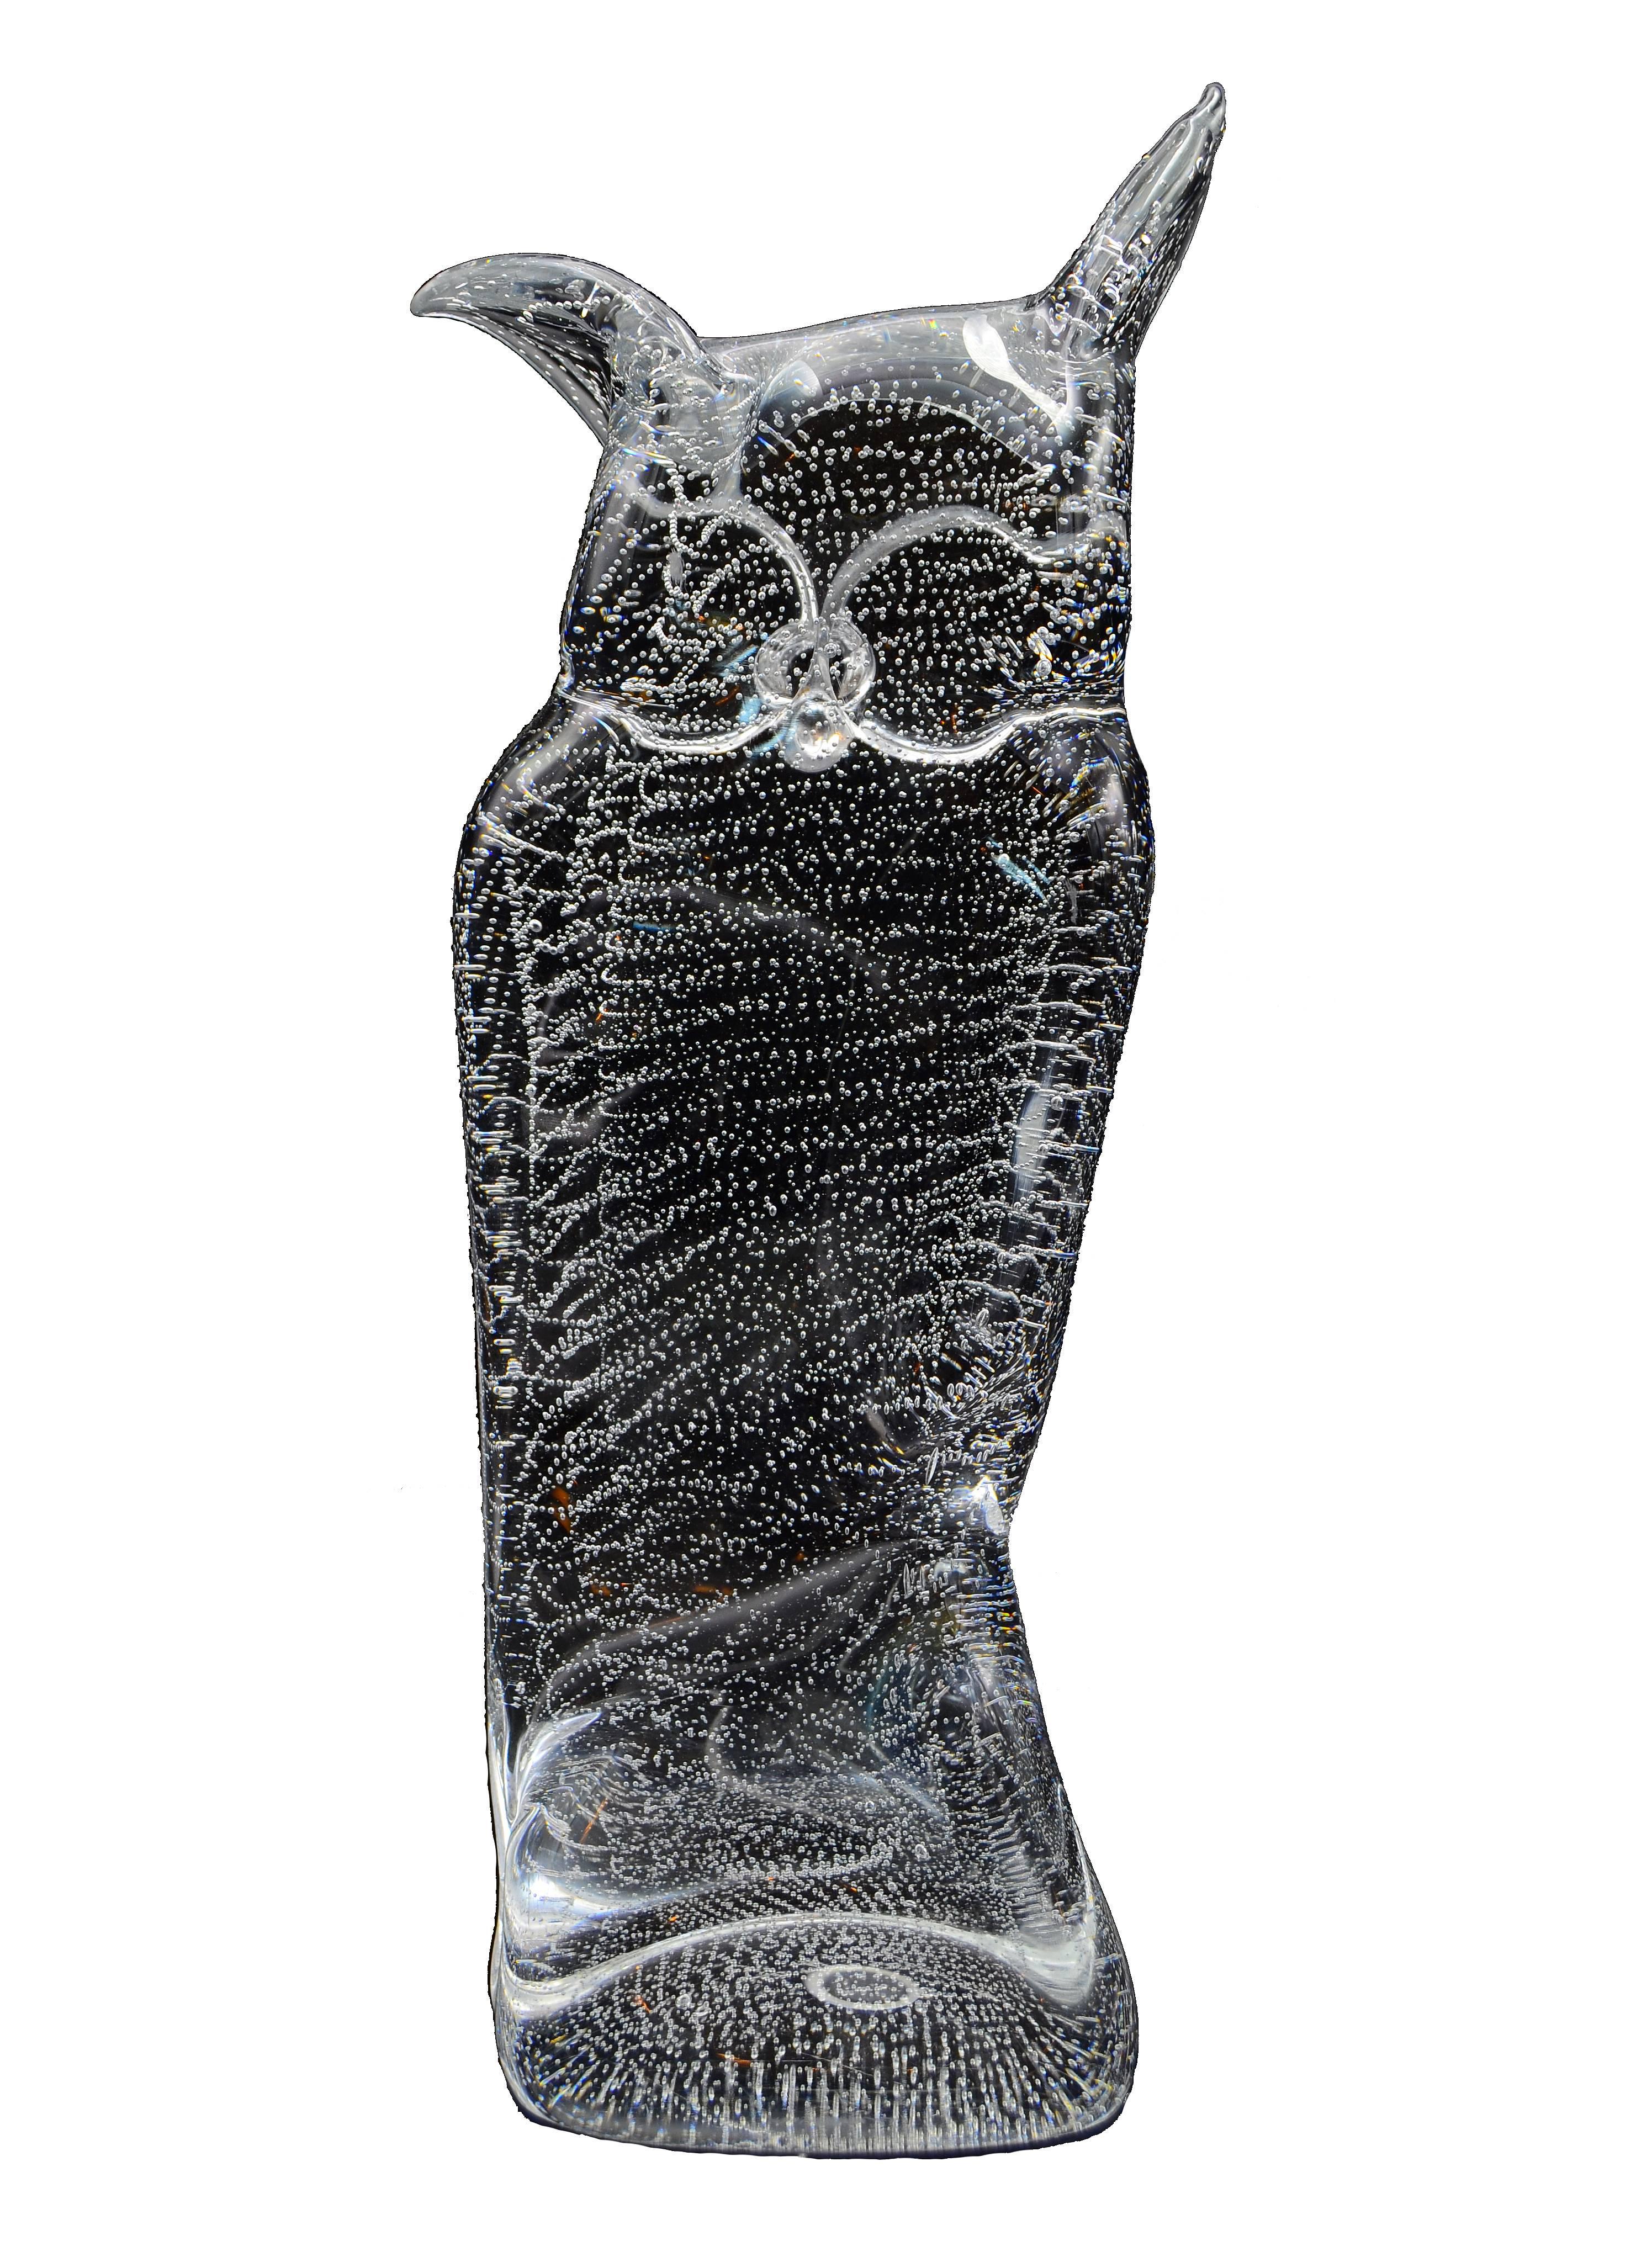 italien Licio Zanetti Murano Glass Owl Sculpture with Bubbles (Sculpture de hibou en verre de Murano avec bulles)